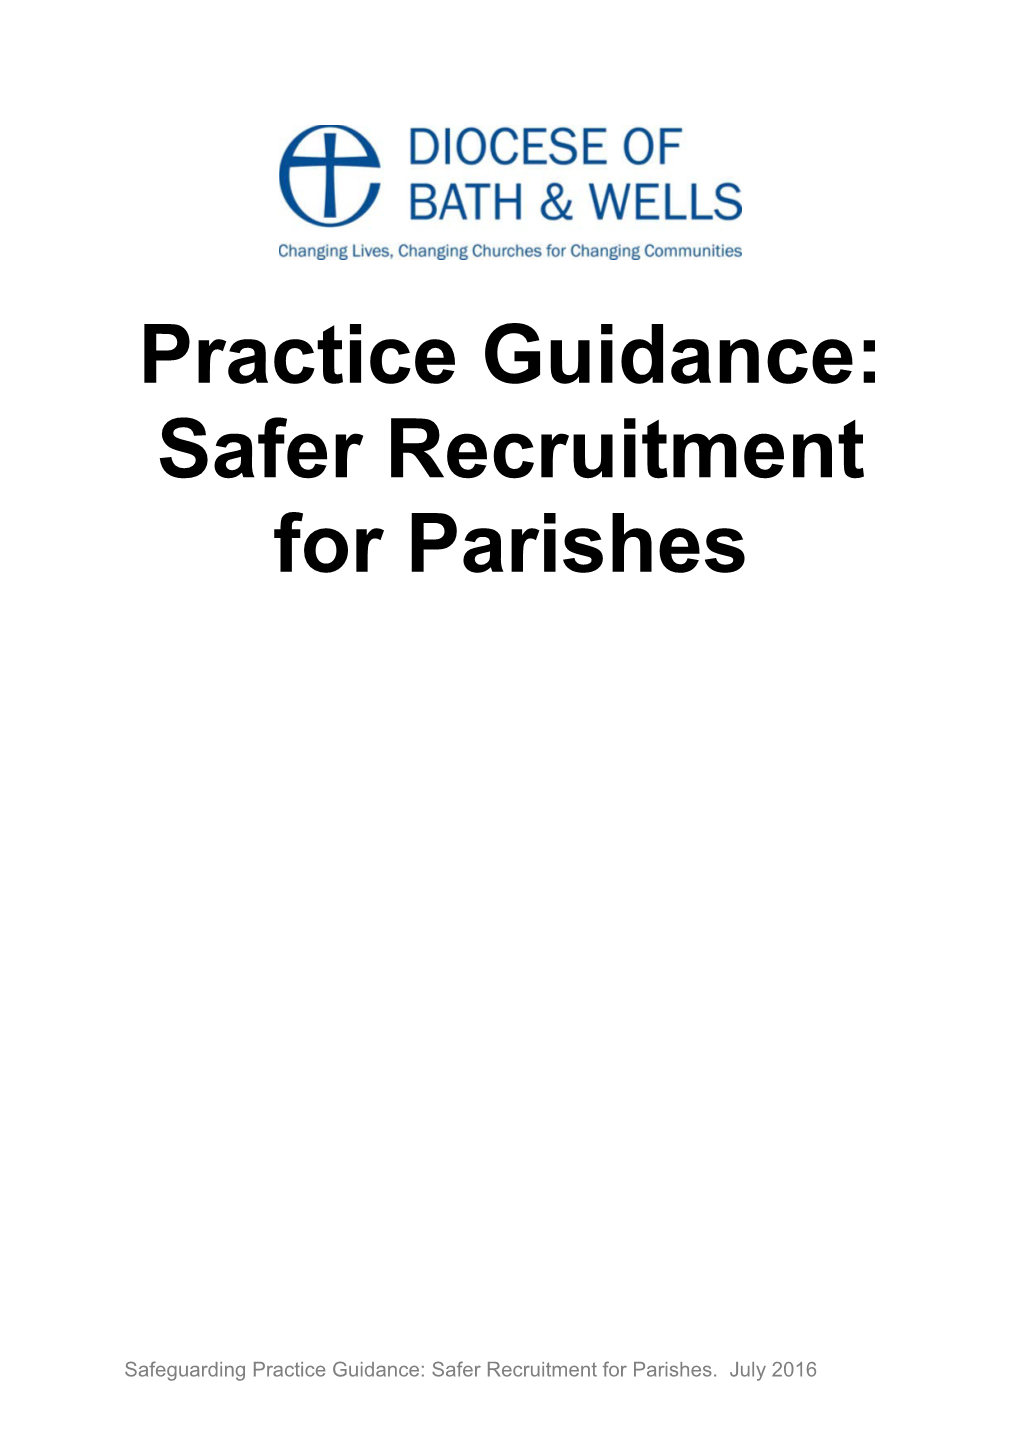 Safer Recruitment for Parishes